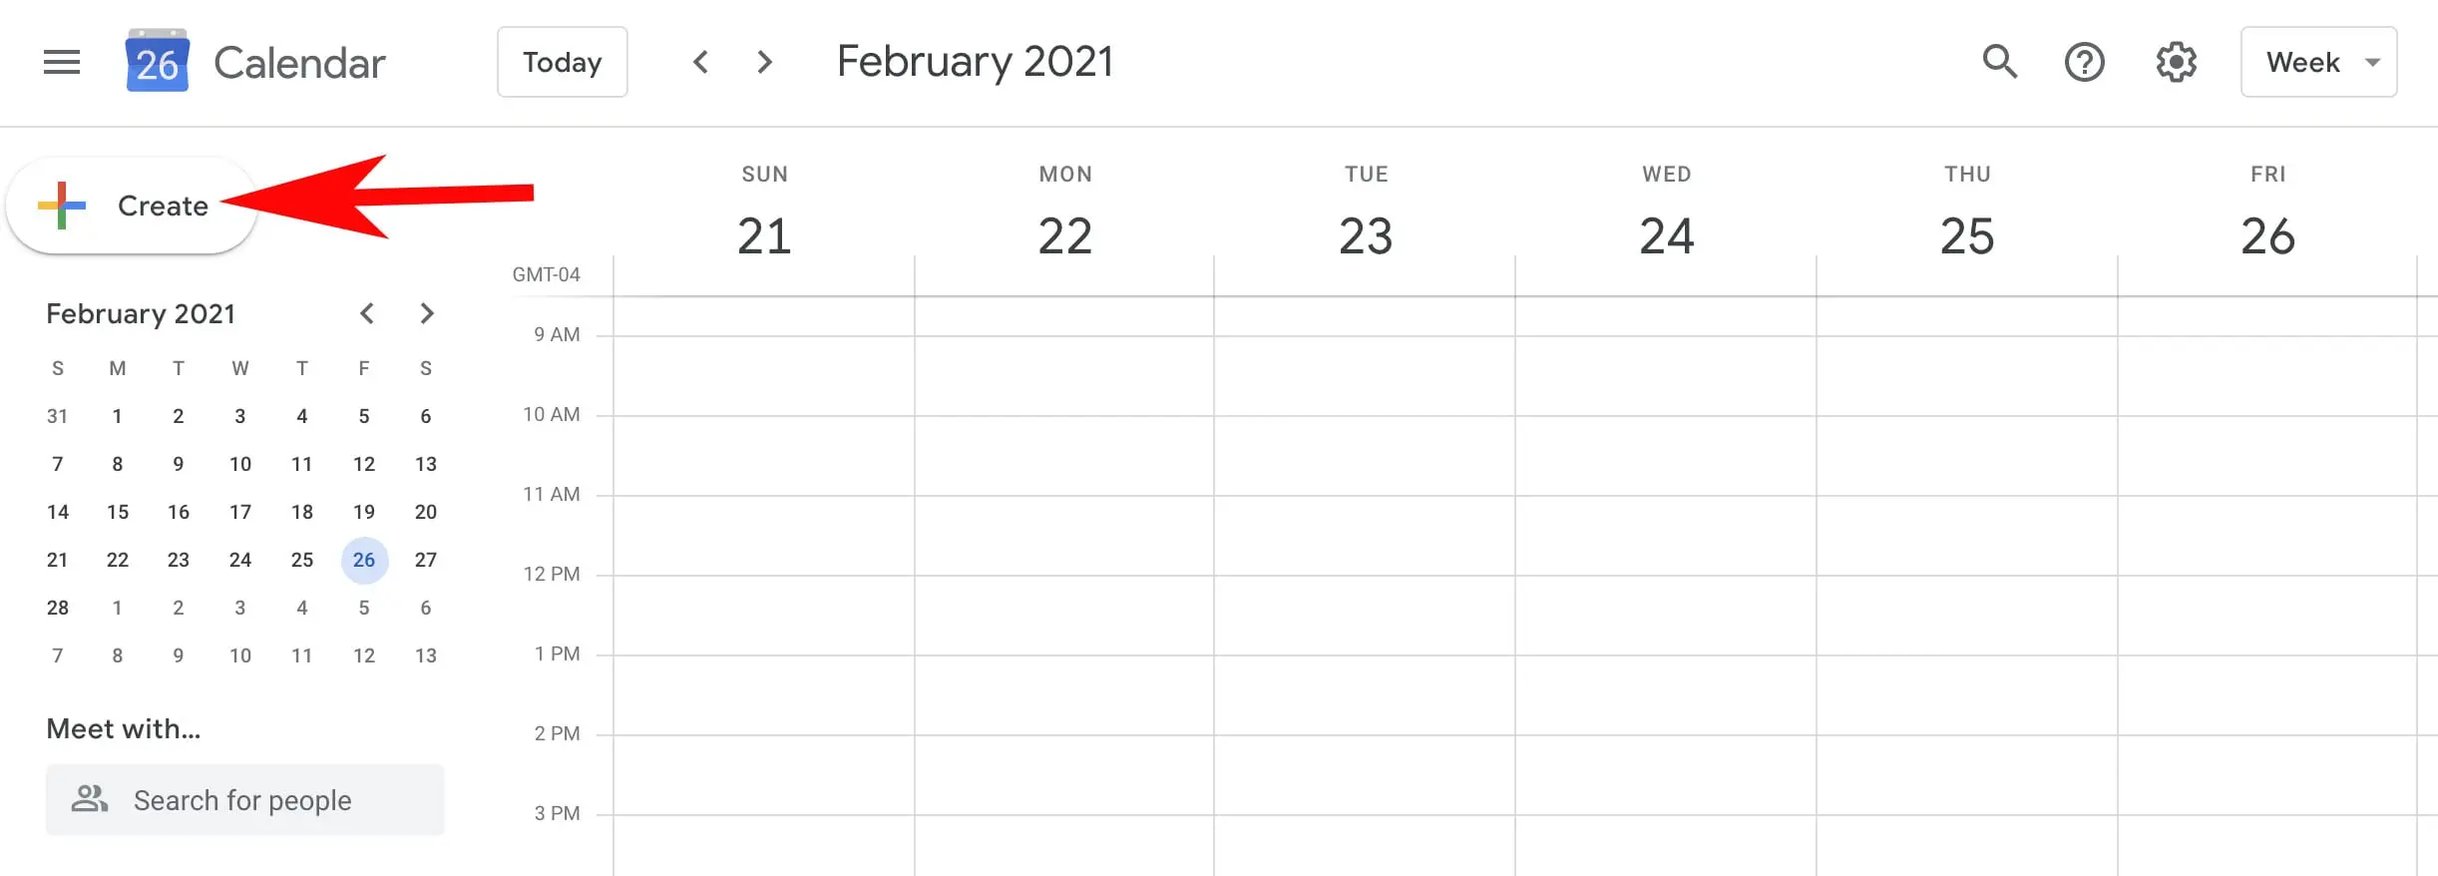 calendar invites 17.webp?width=2444&height=876&name=calendar invites 17 - How to Send a Calendar Invite with Google Calendar, Apple Calendar &amp; Outlook